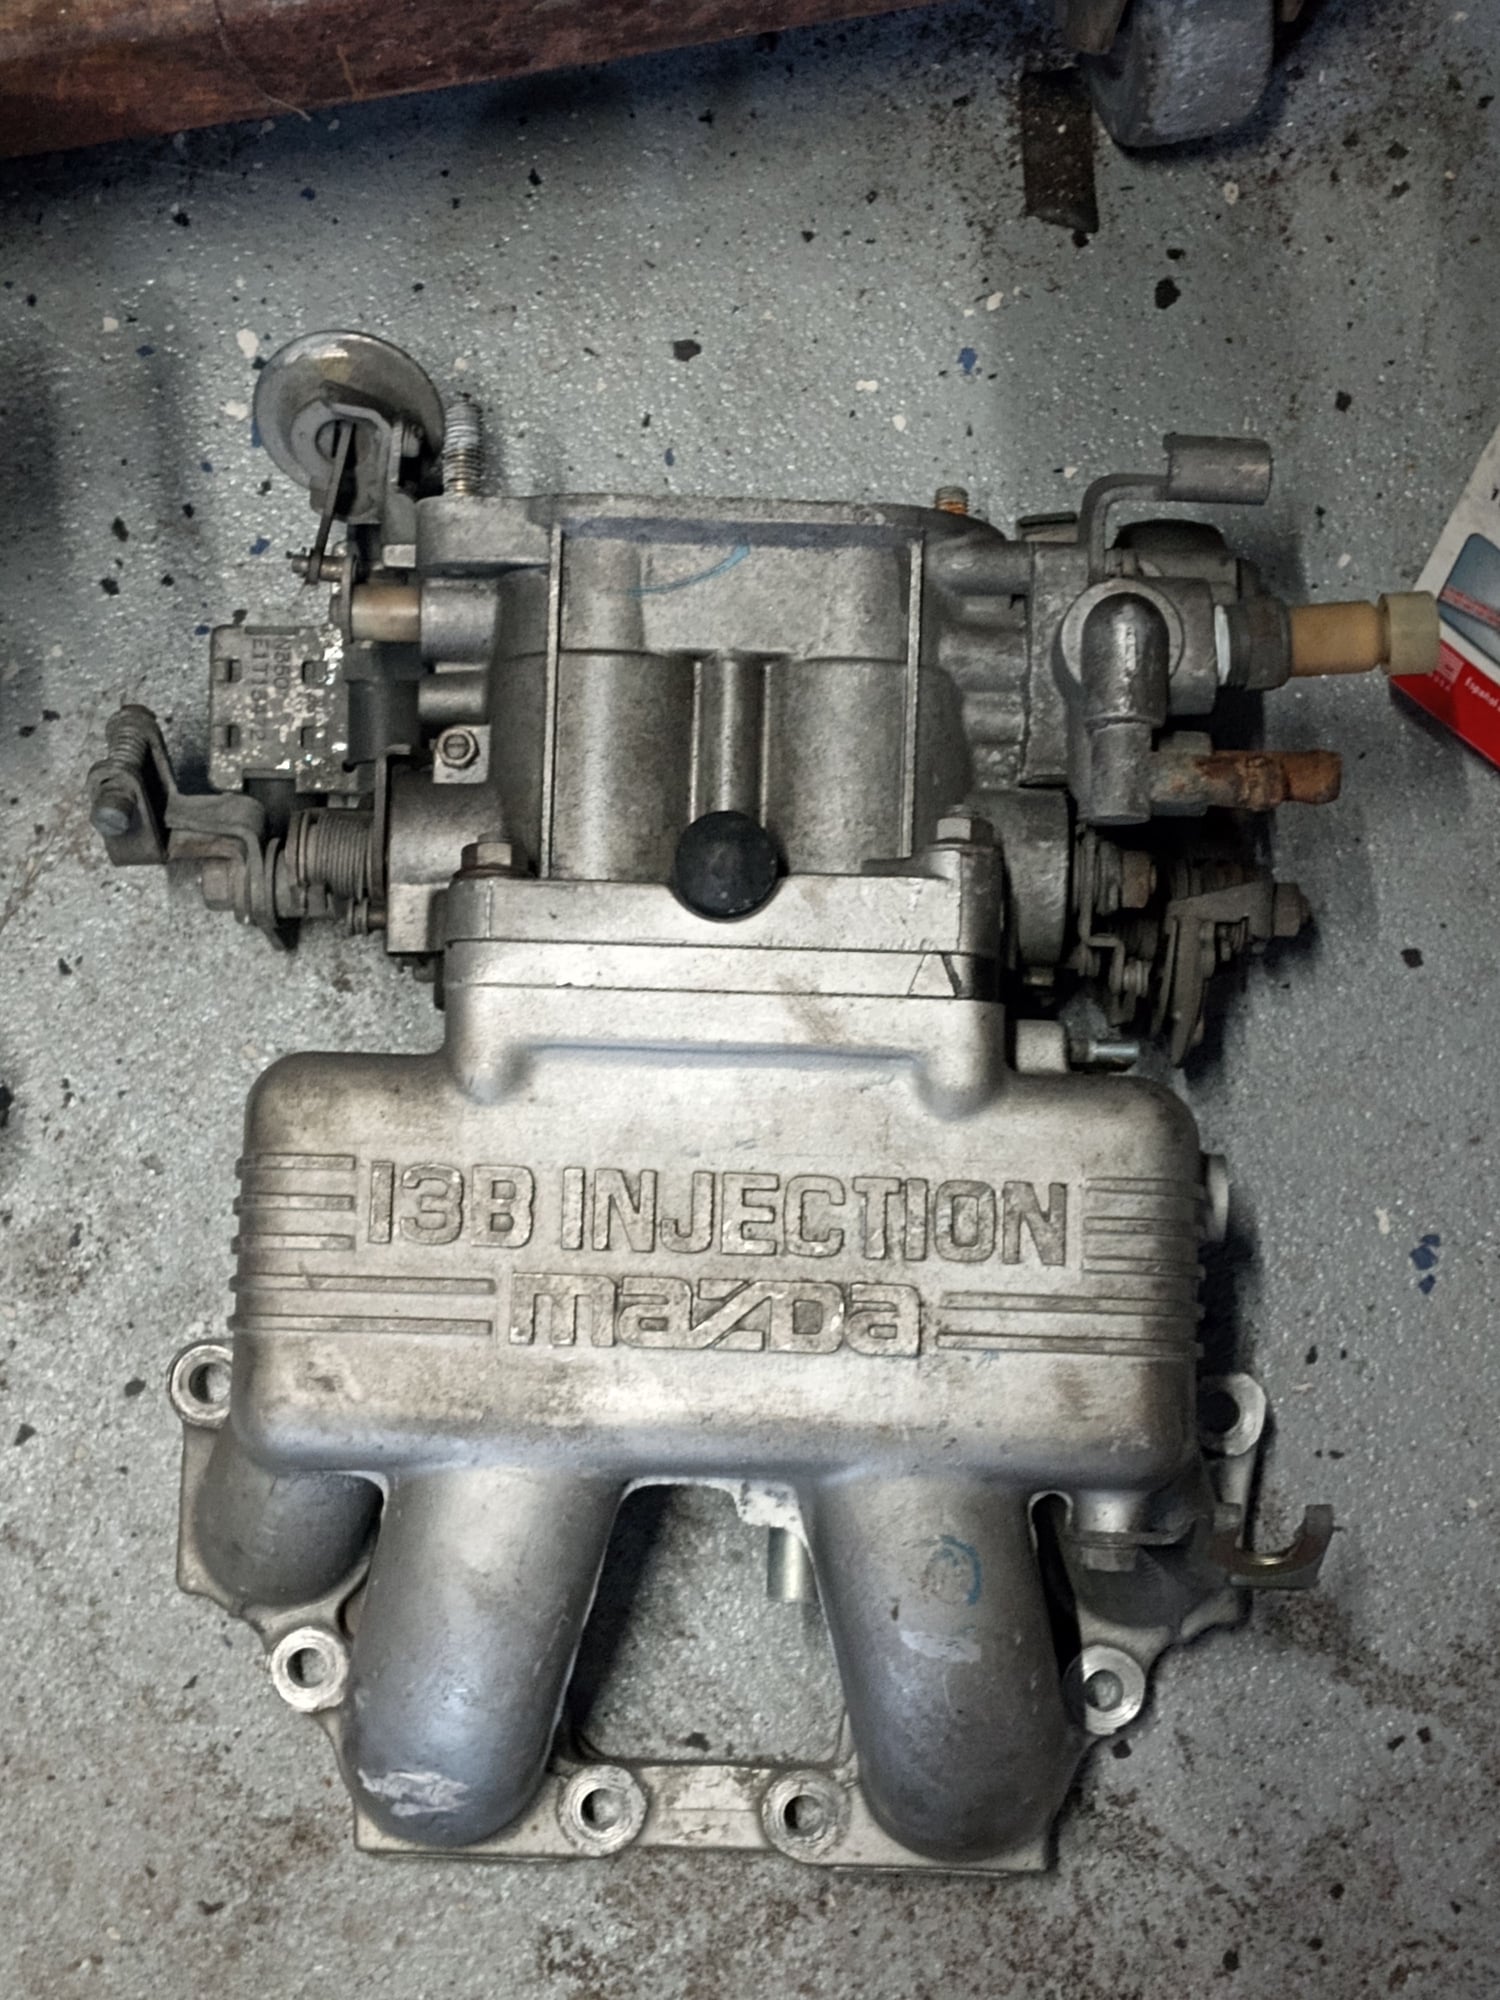 Engine - Intake/Fuel - Second gen intake manifold - Used - Lancaster, PA 17022, United States